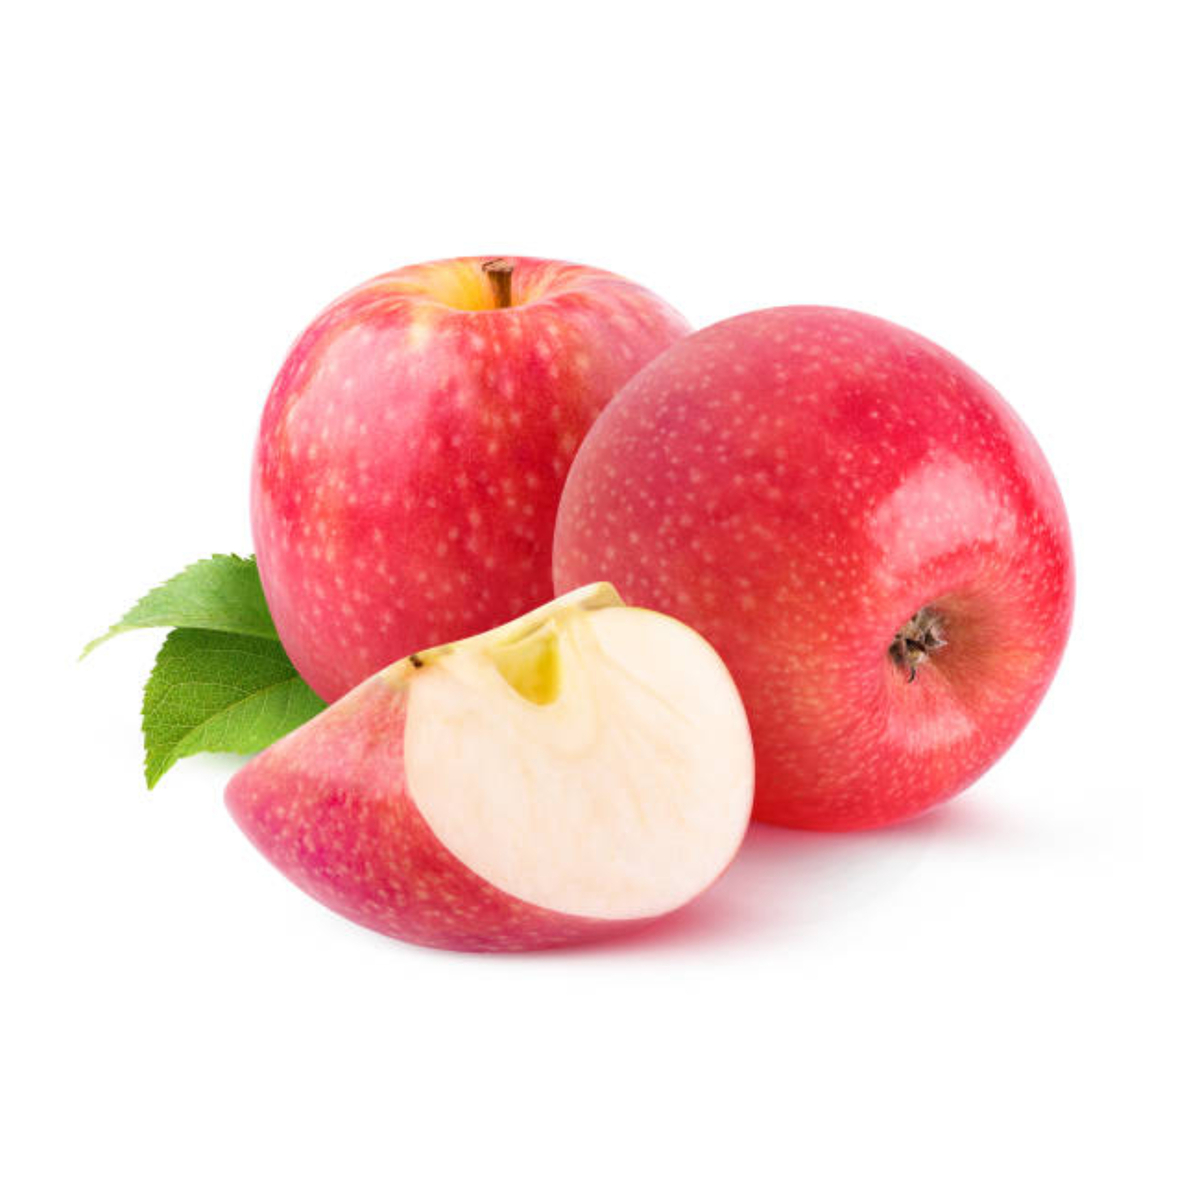 Apple Cripps Pink South Africa 1kg